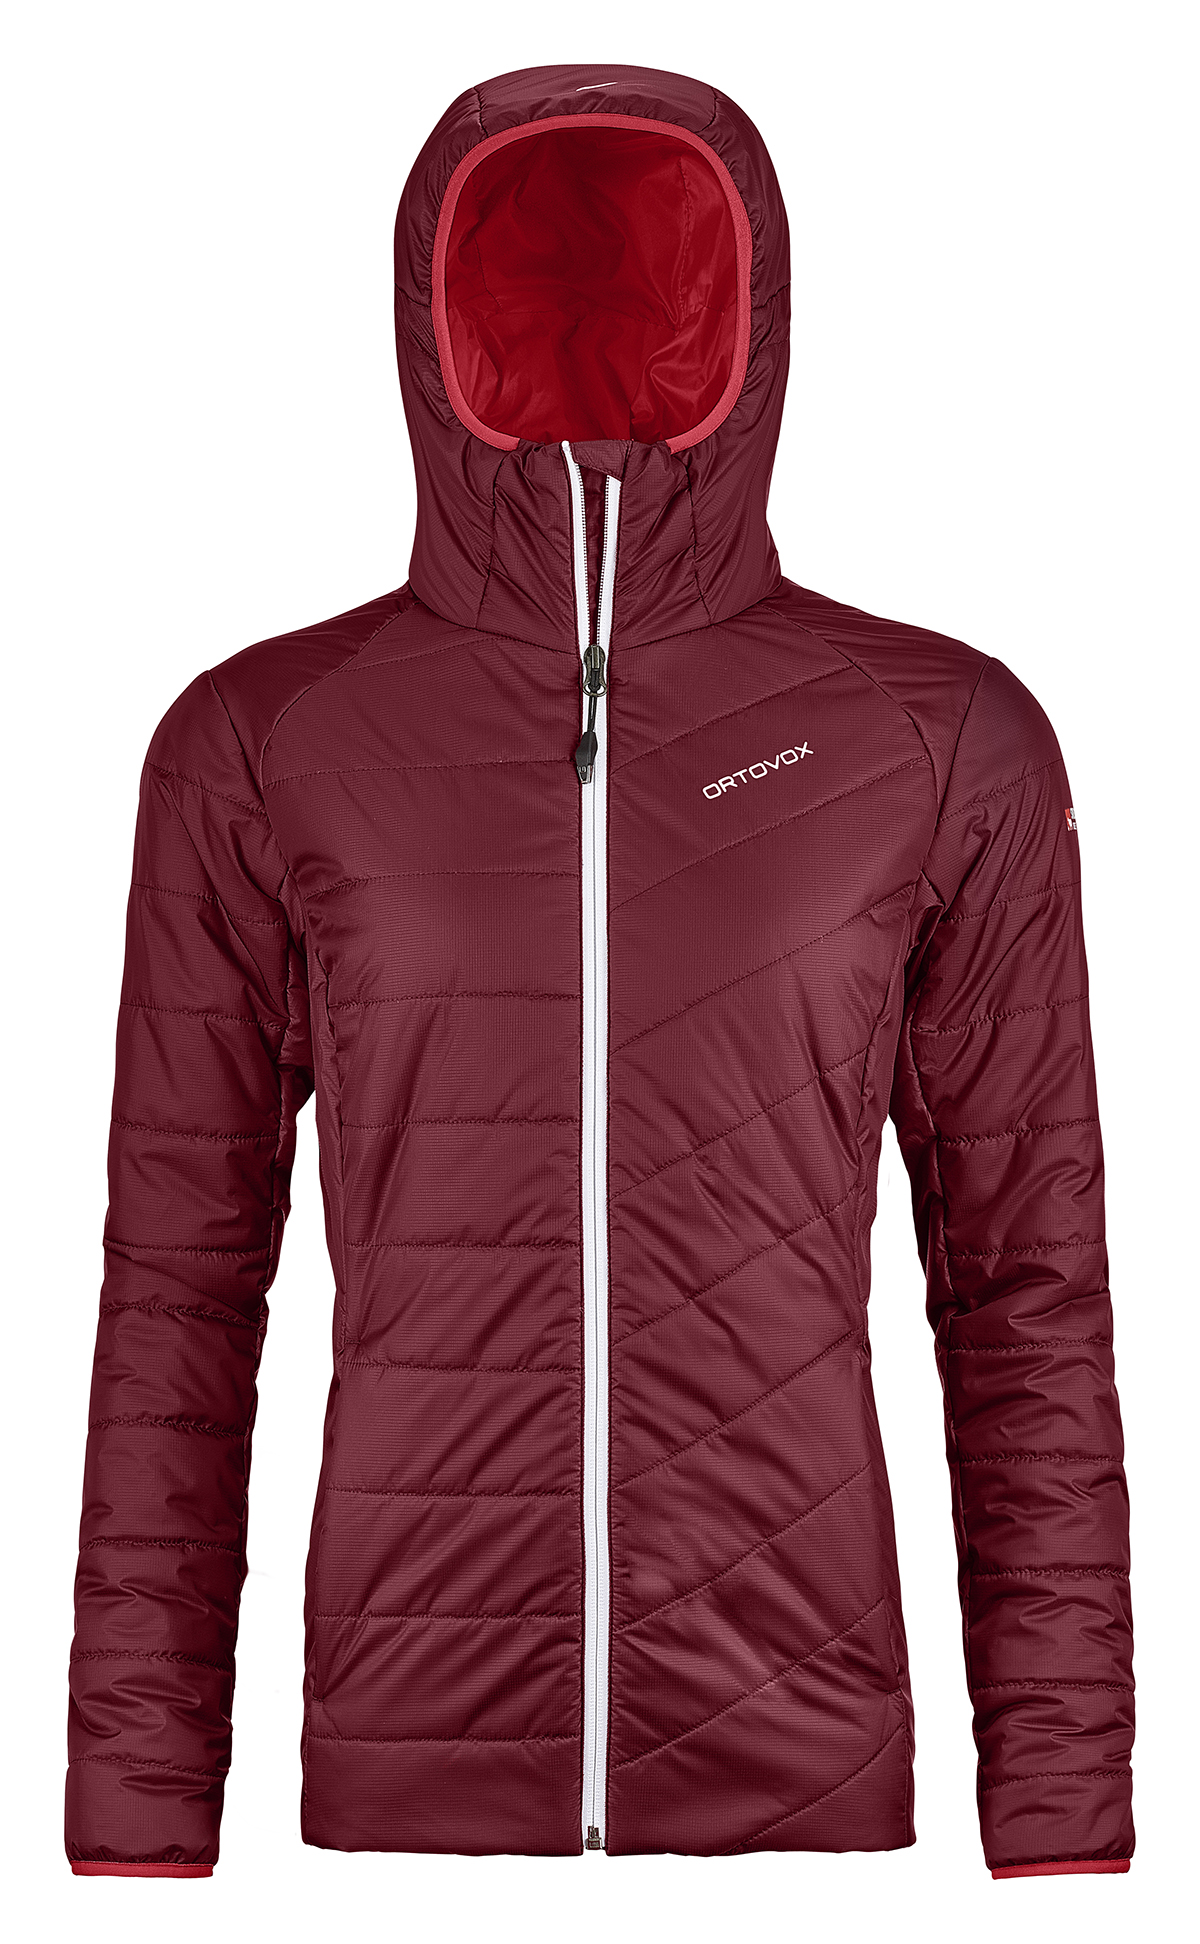 Ortovox Swisswool Piz Bernina Jacket